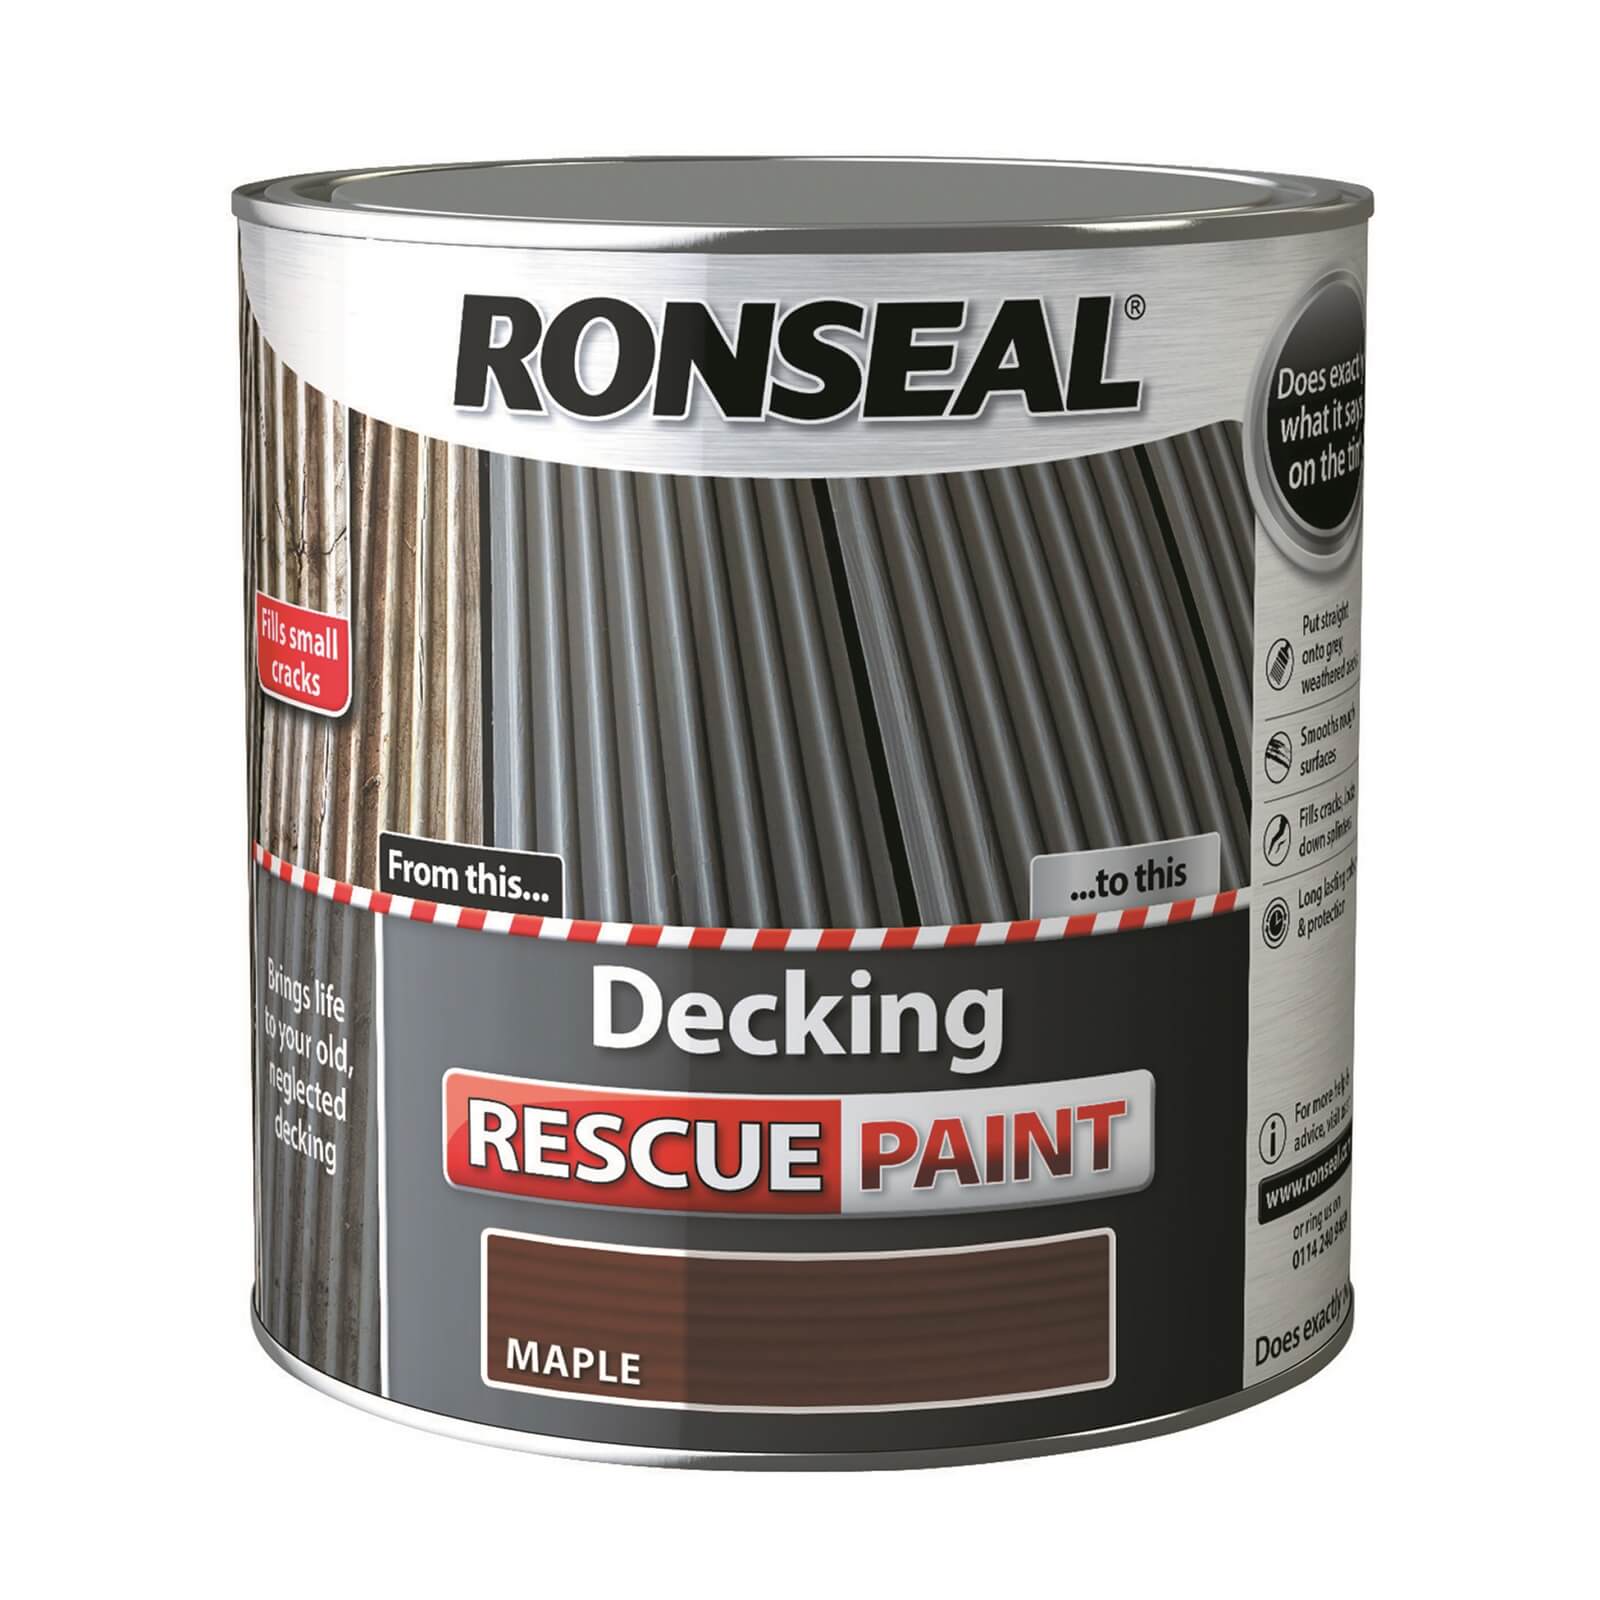 Ronseal Decking Rescue Paint Maple - 2.5L